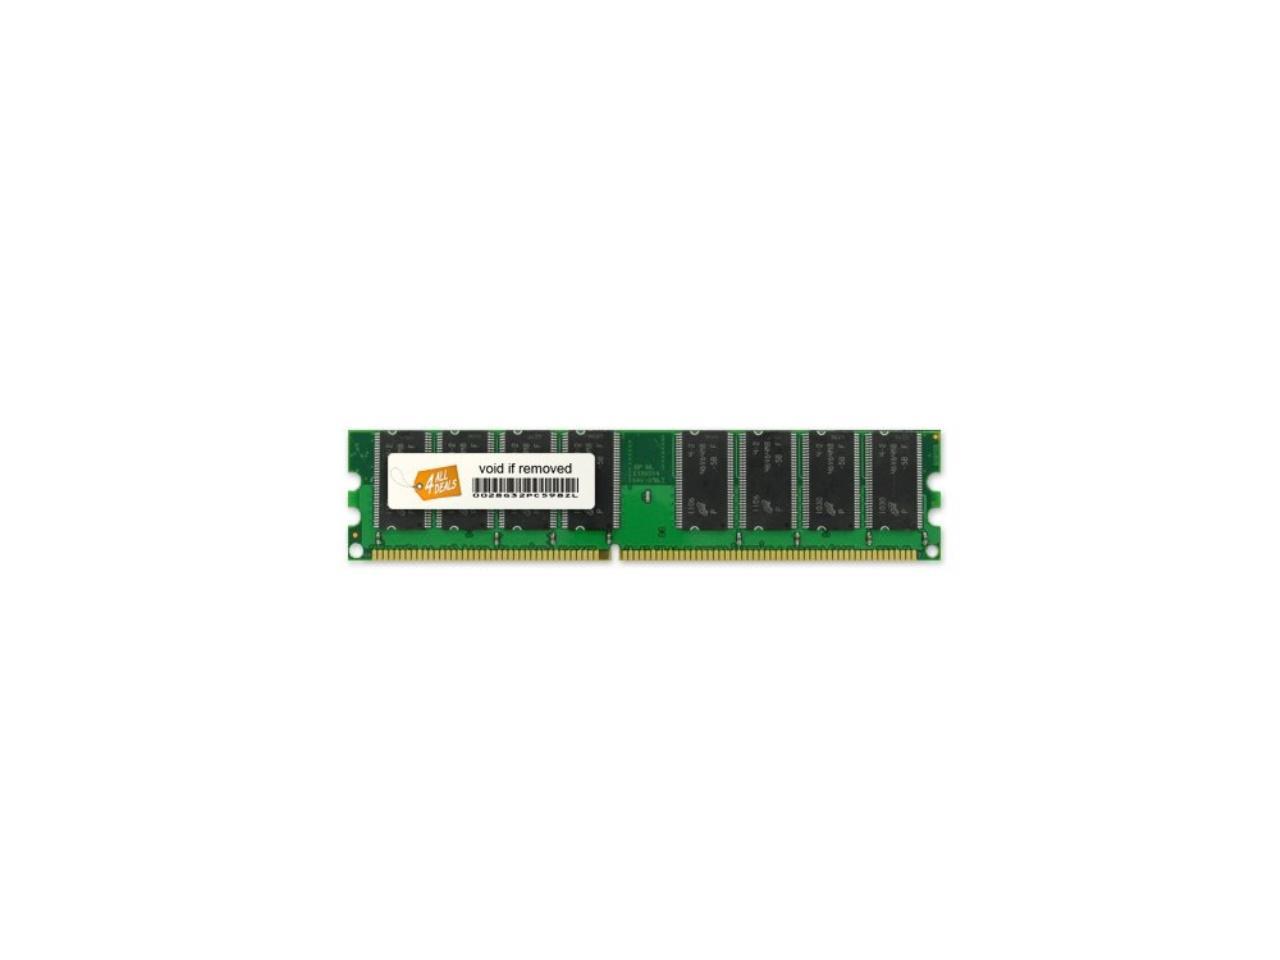 1GB Integral PC2100 DDR RAM CL2.5 desktop memory module 184 pins